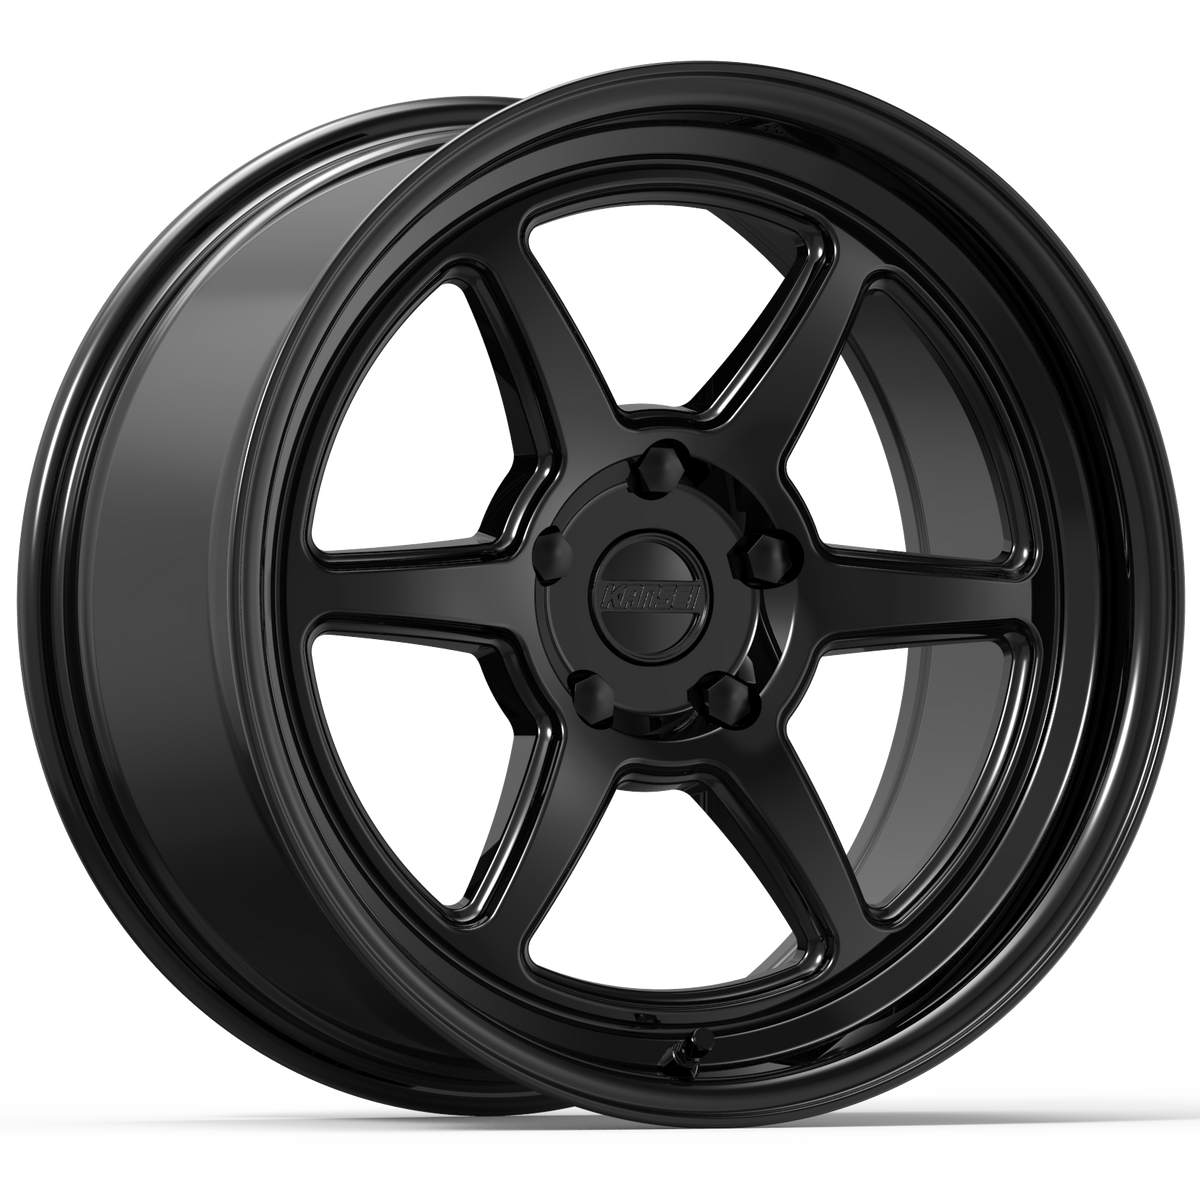 K14B ROKU Wheel, Size: 18" x 9.50", Bolt Pattern: 5 x 112 mm, Backspace: 6.12" [Finish: Gloss Black]